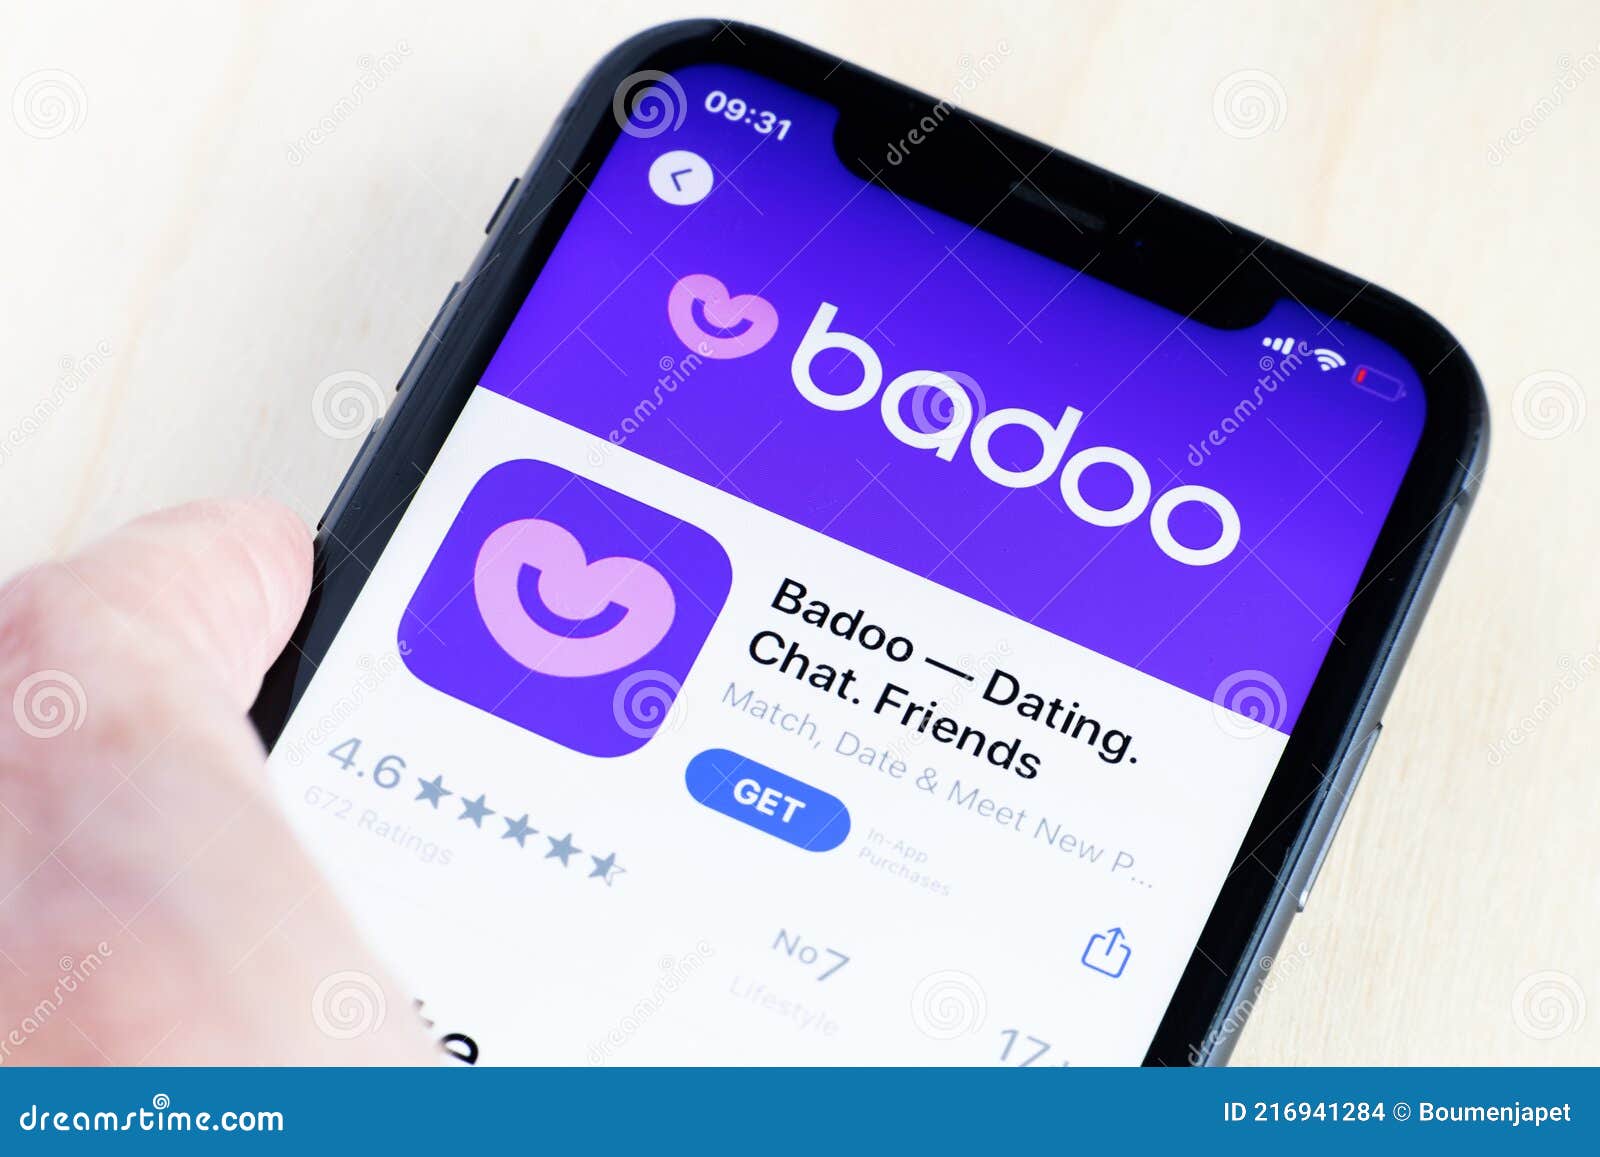 Someone favorite to make badoo how Badoo Pro